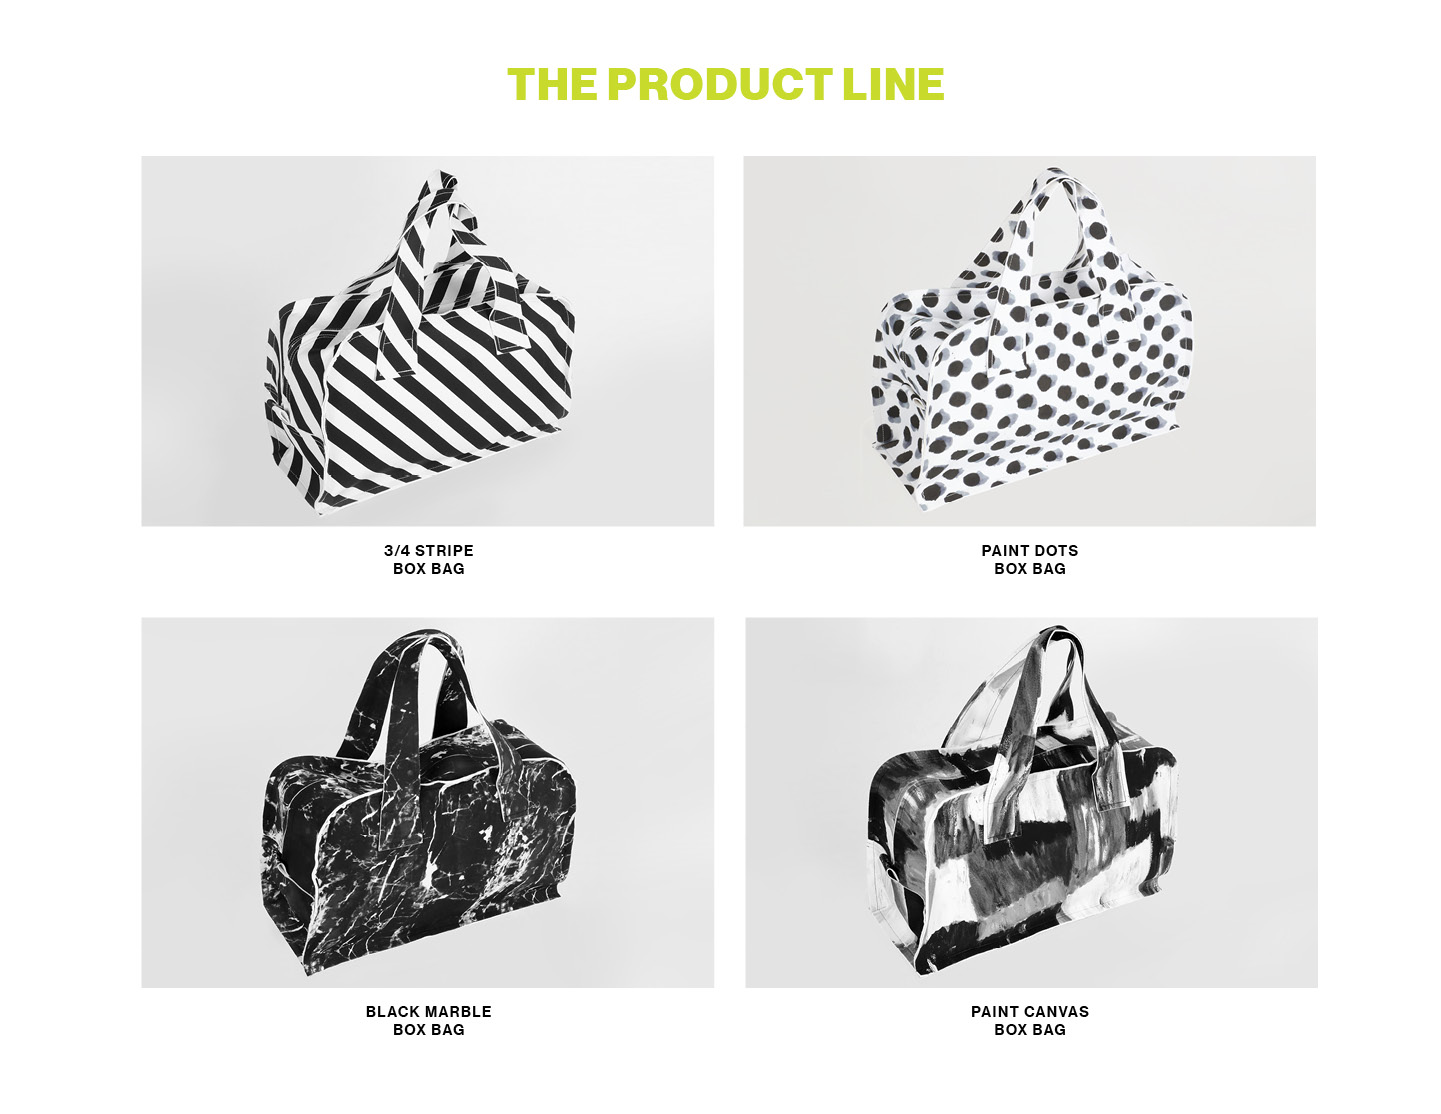 The Box Bag product line